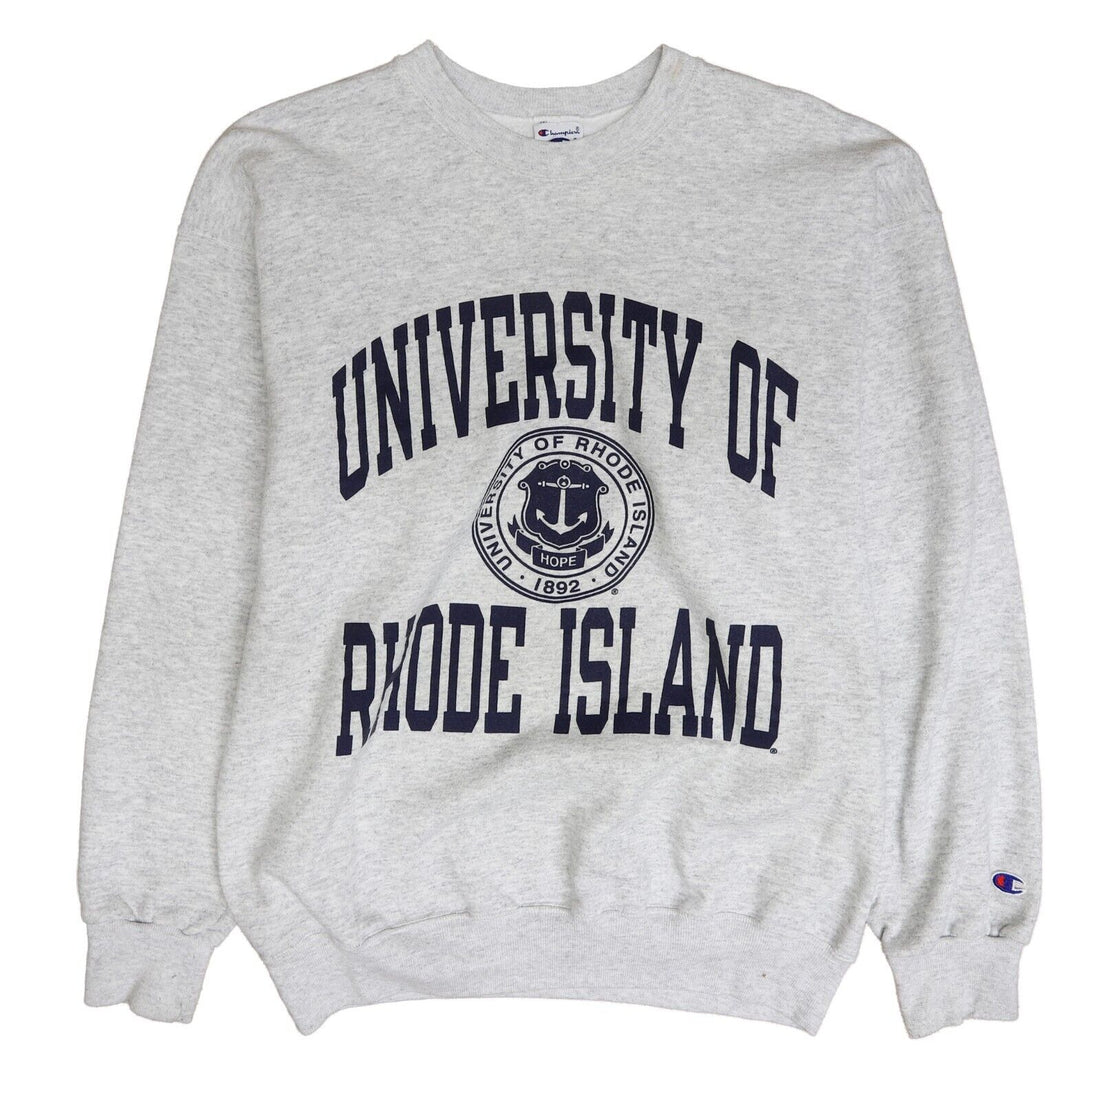 Vintage University of Rhode Island Champion Sweatshirt Crewneck Size XL 90s